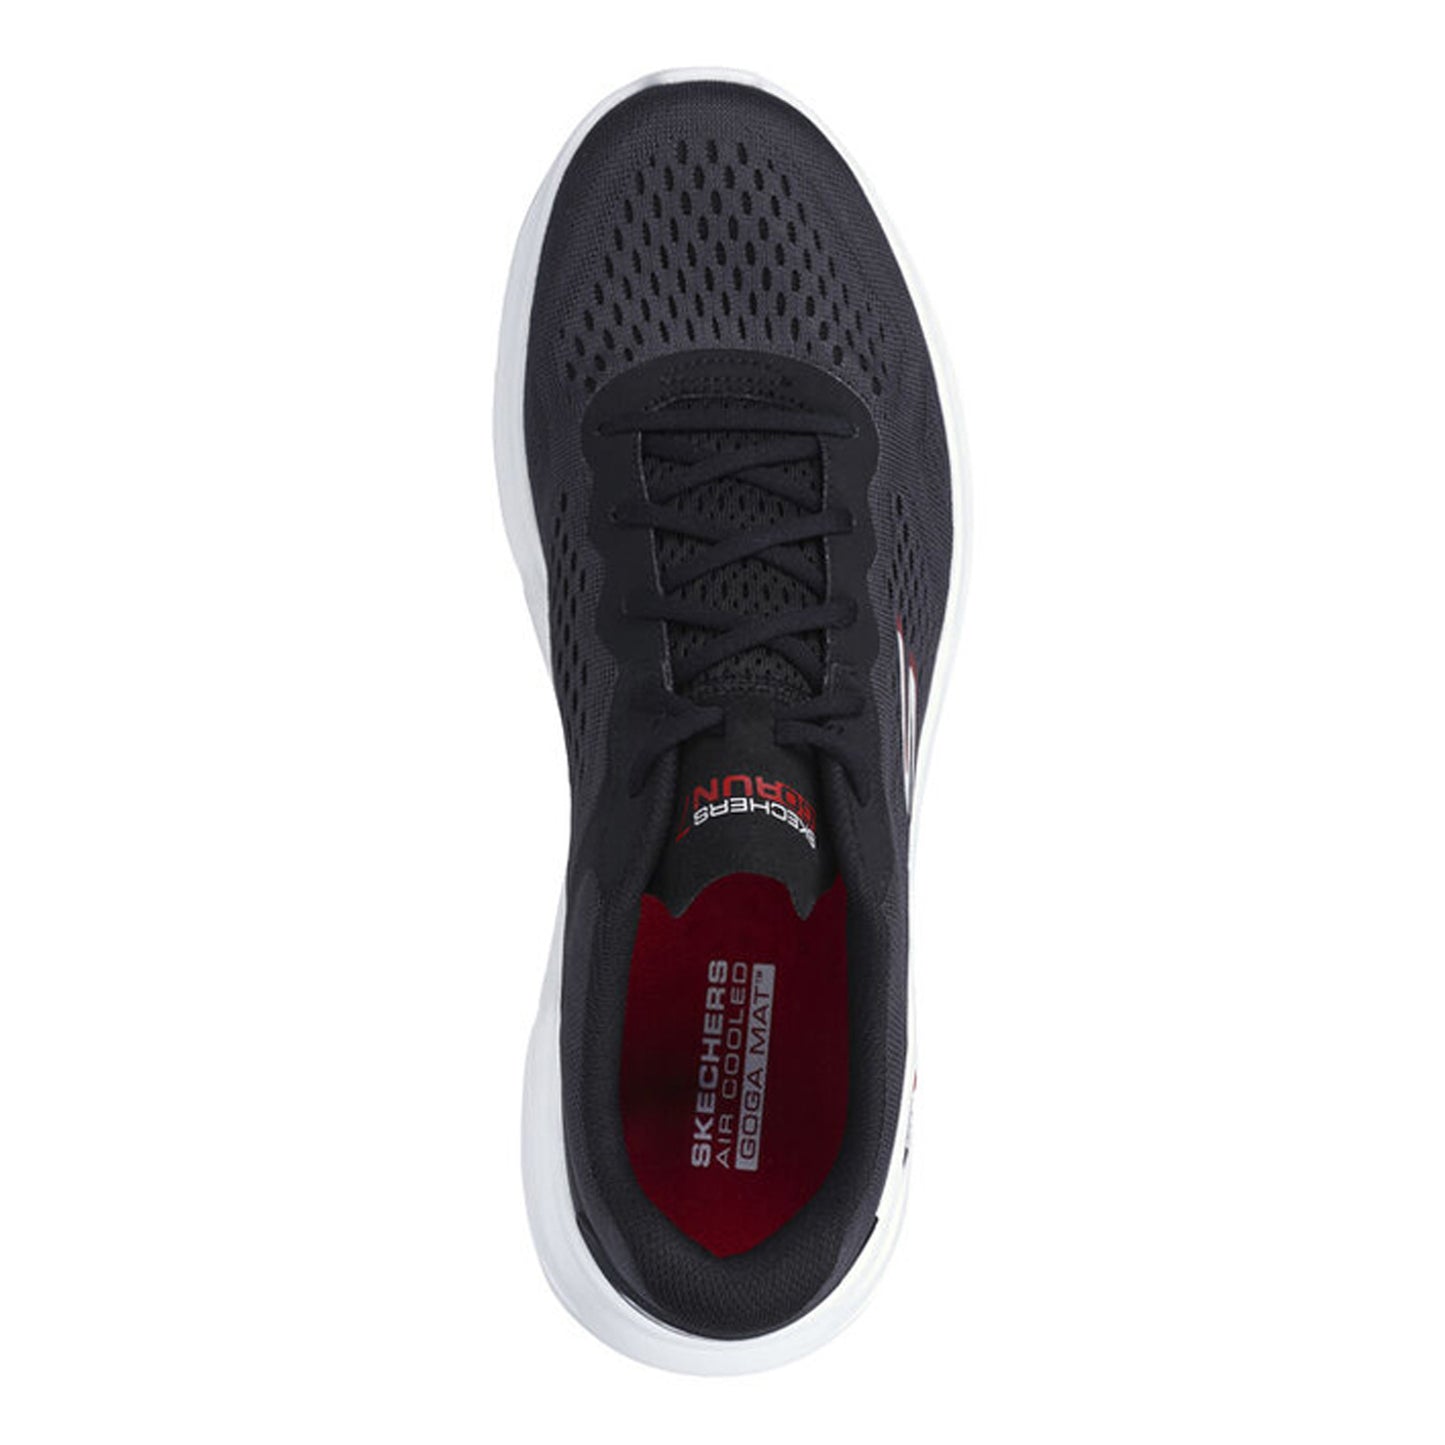 Peltz Shoes  Men's Skechers GO RUN 7.0 Running Shoe Charcoal Black Red 220644-CCBK